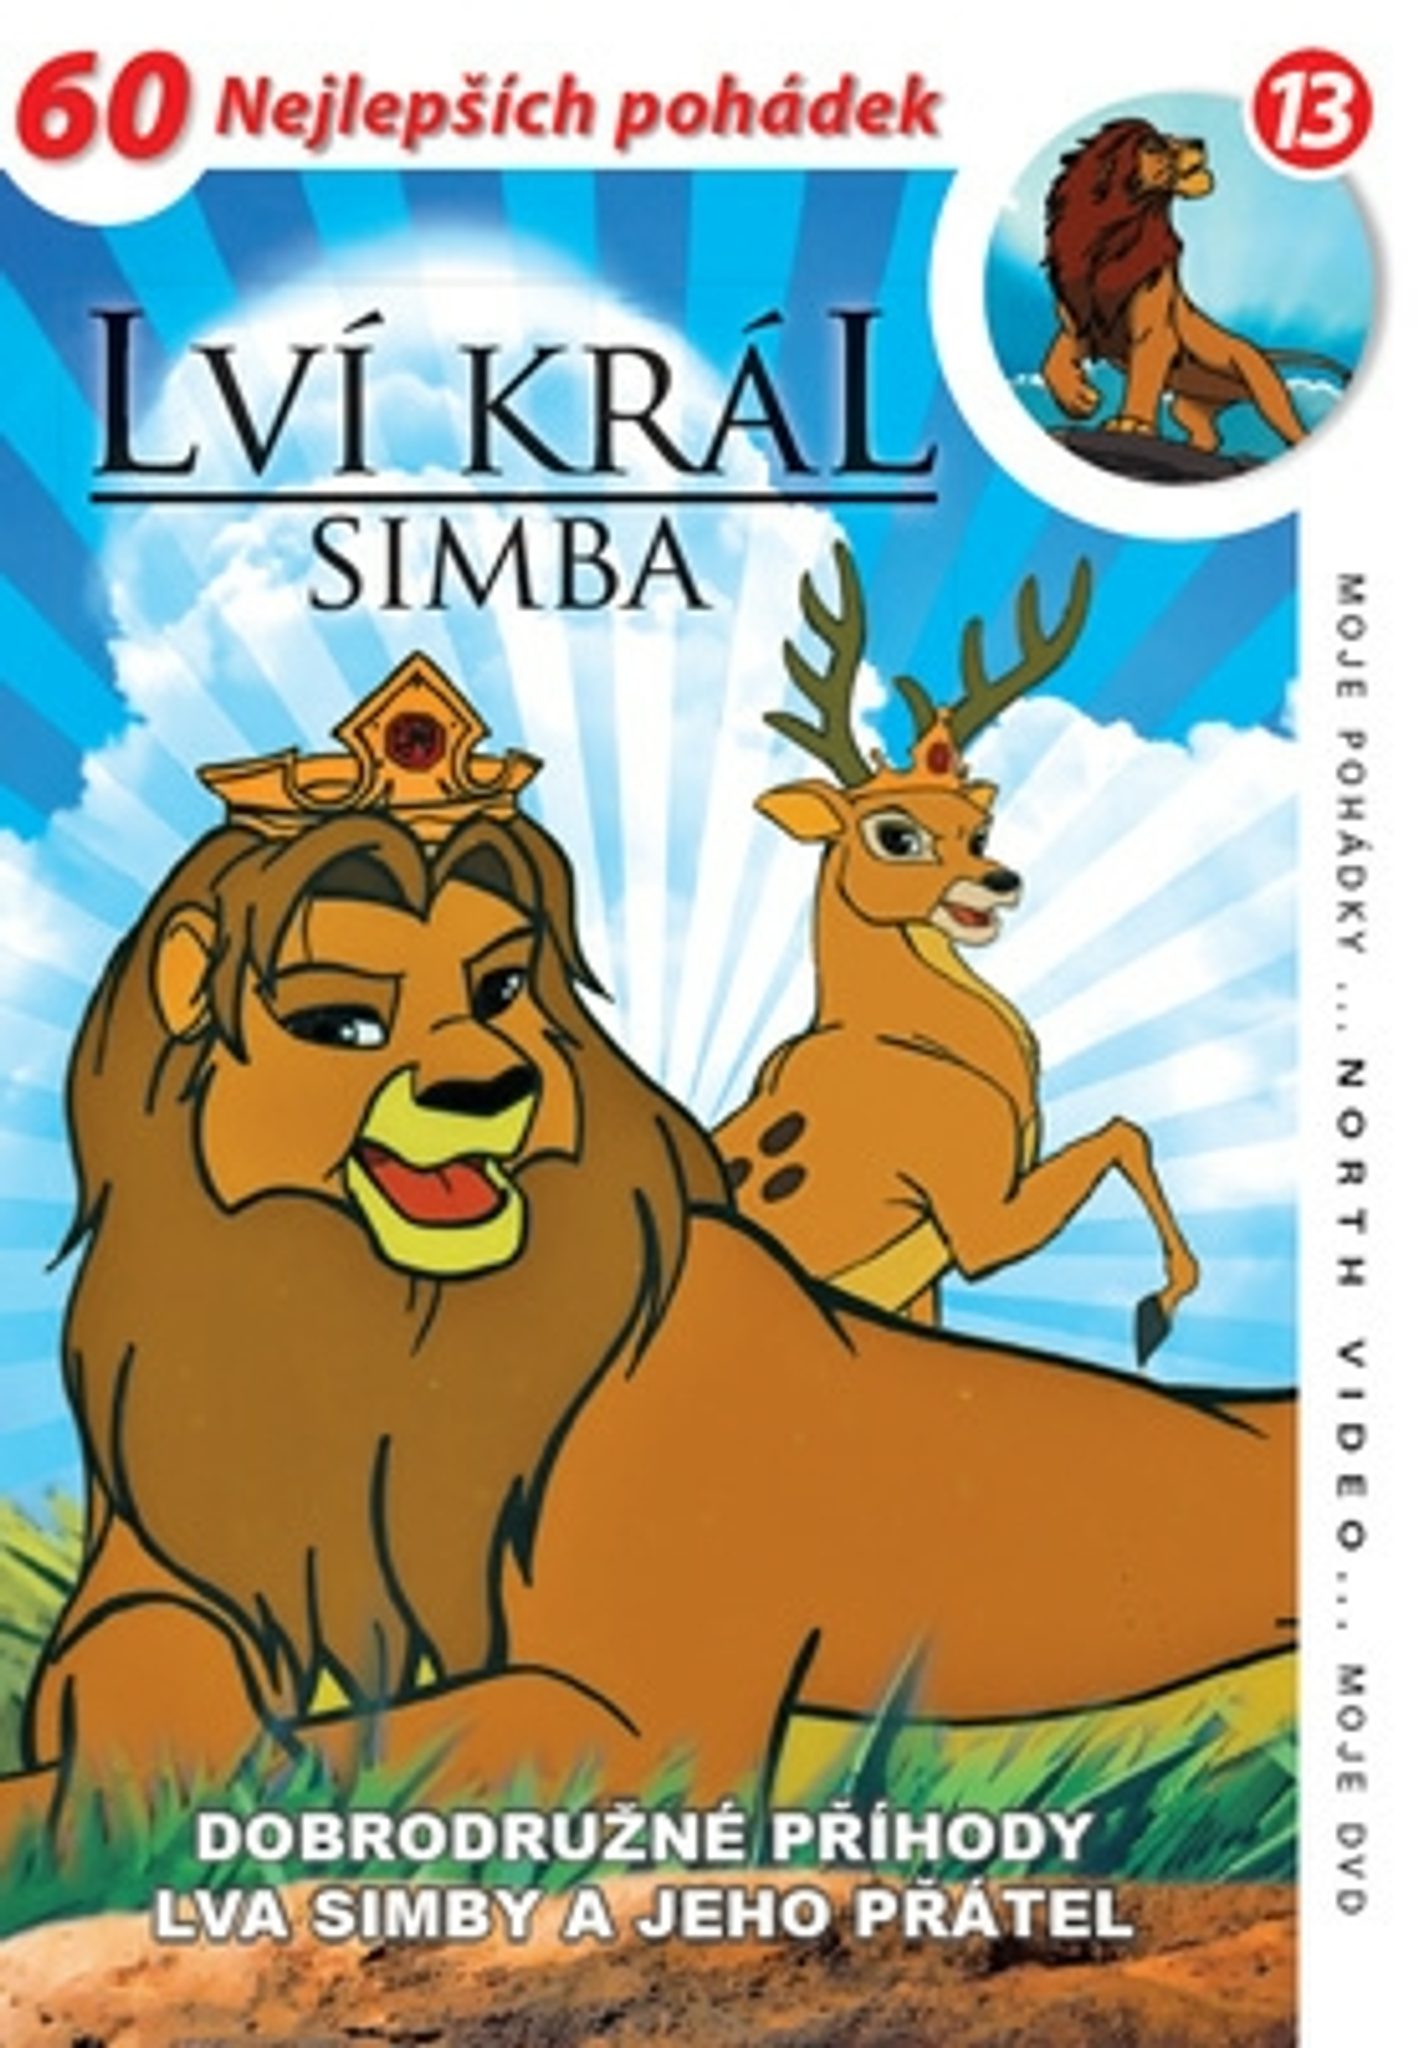 DVD Lv krl - Simba 13